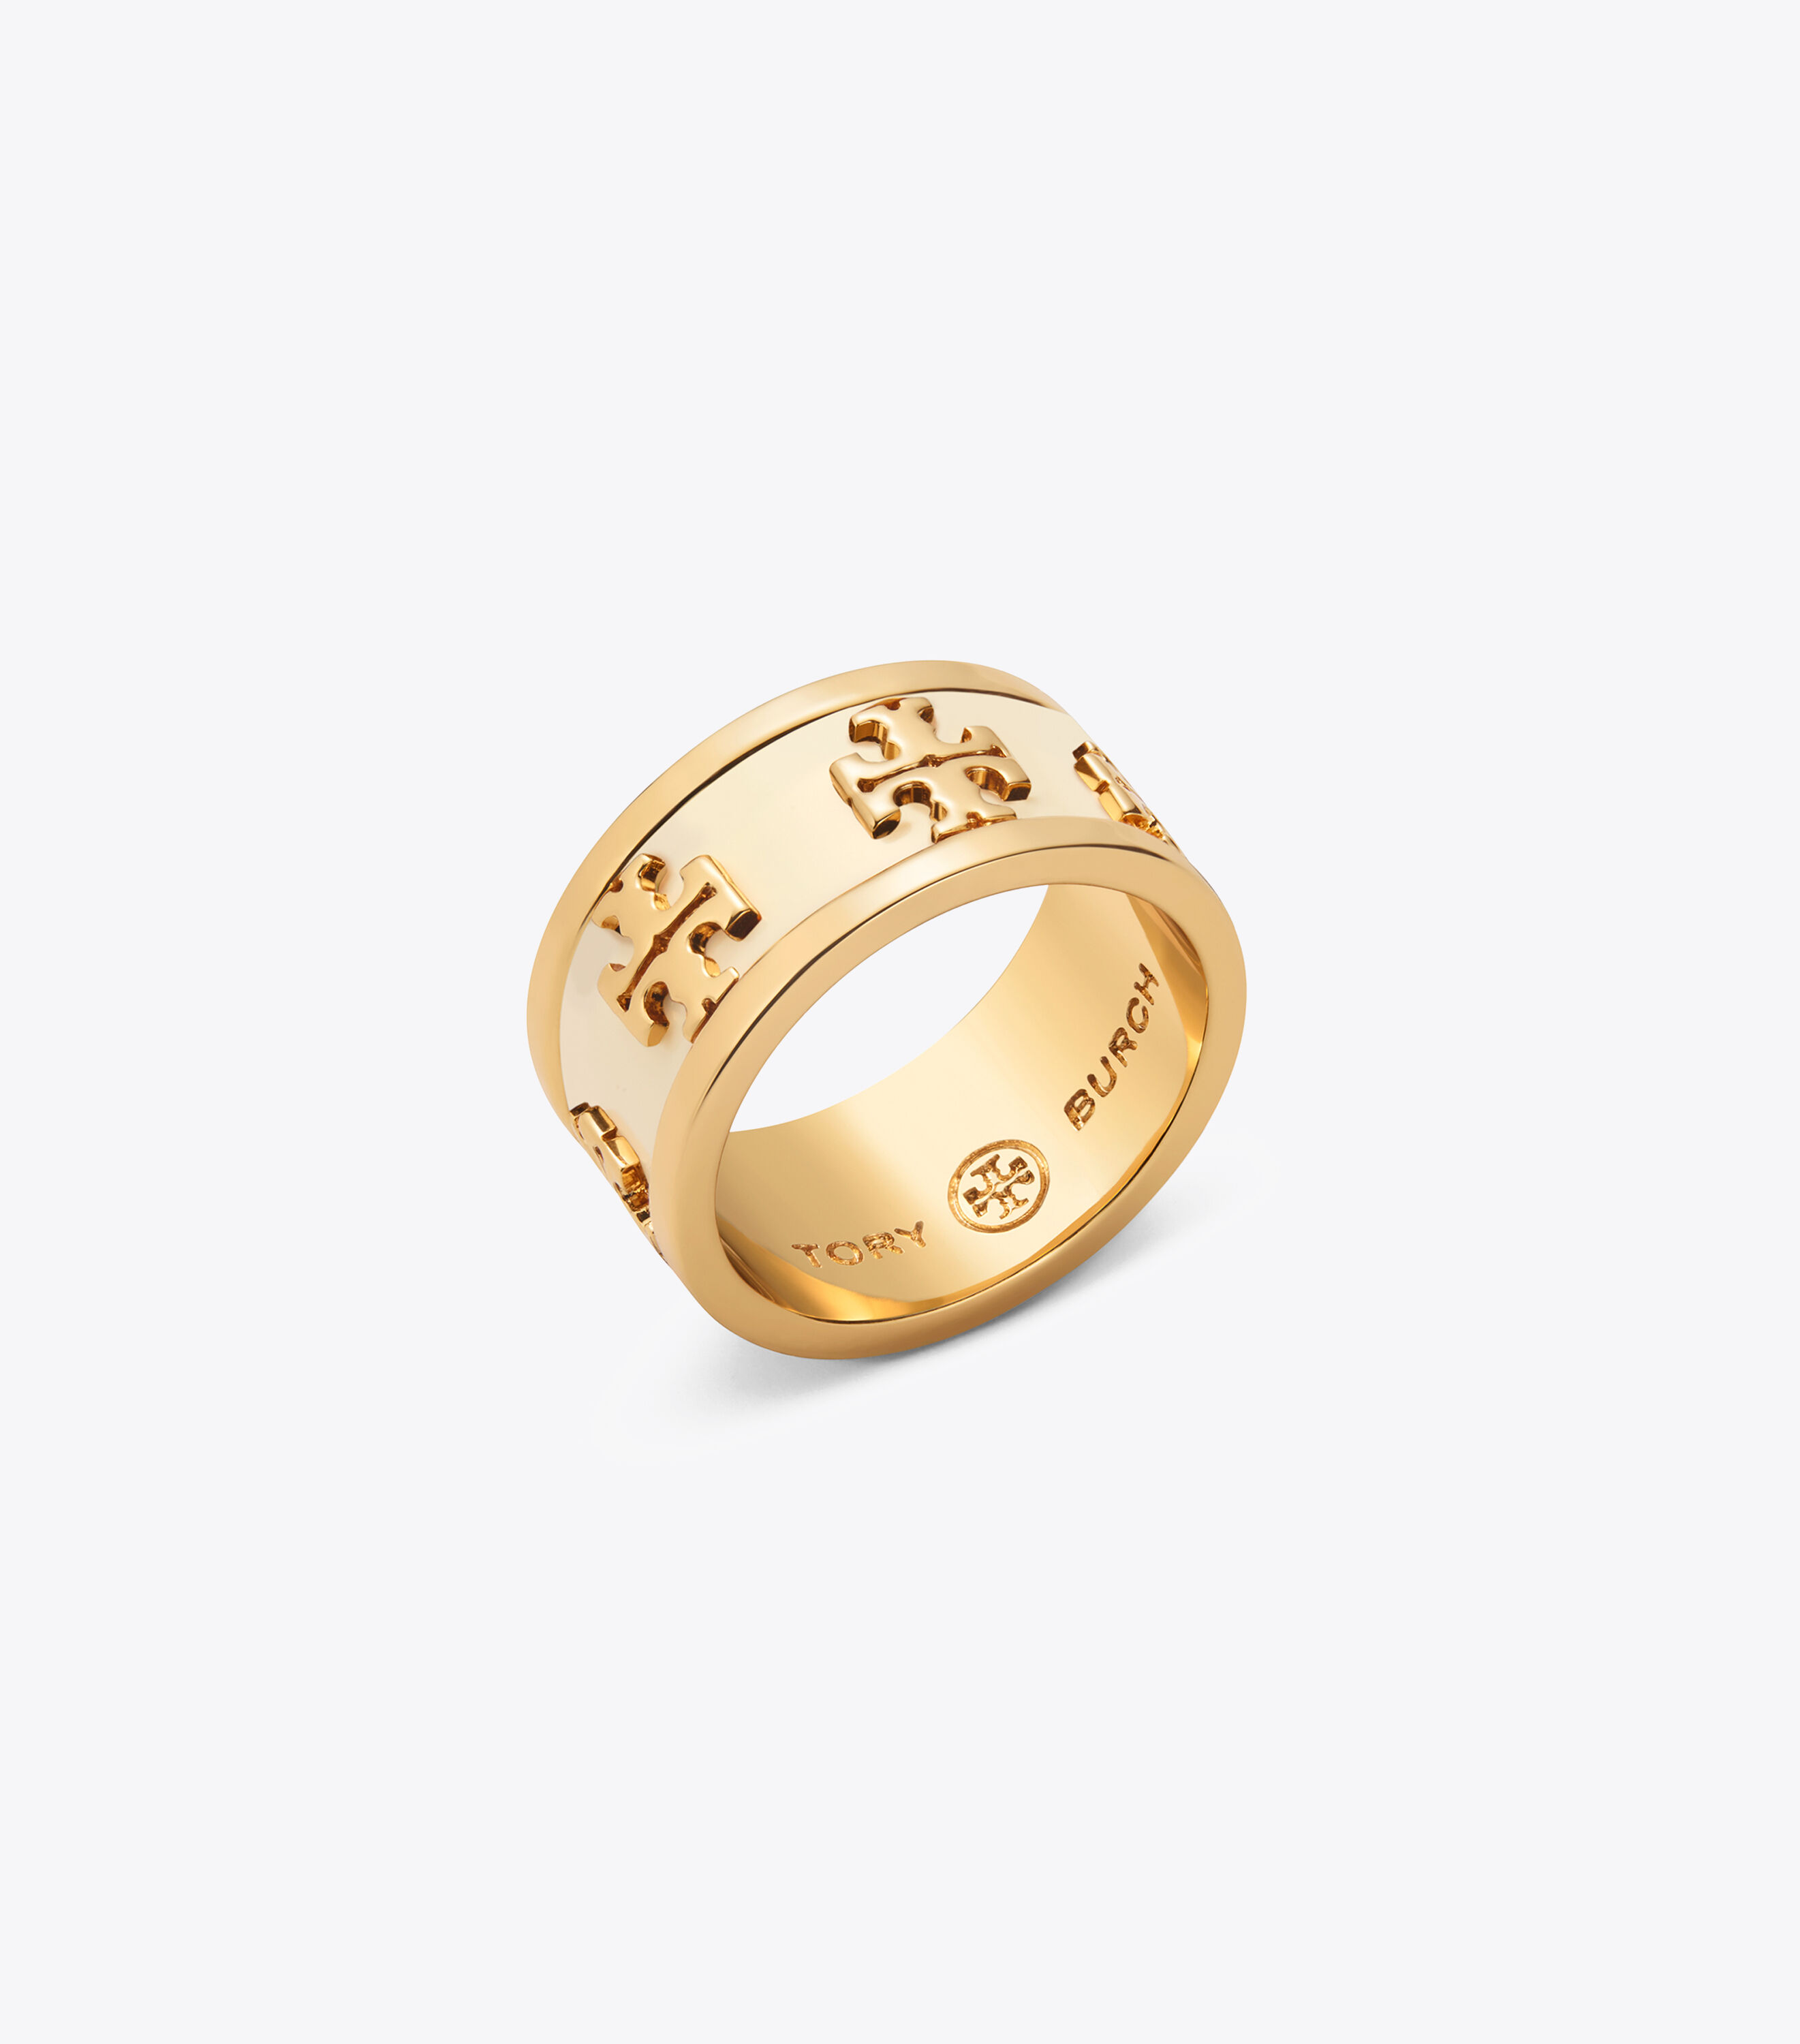 Tory Burch | Jewelry | Tory Burch Gold White Ring | Poshmark